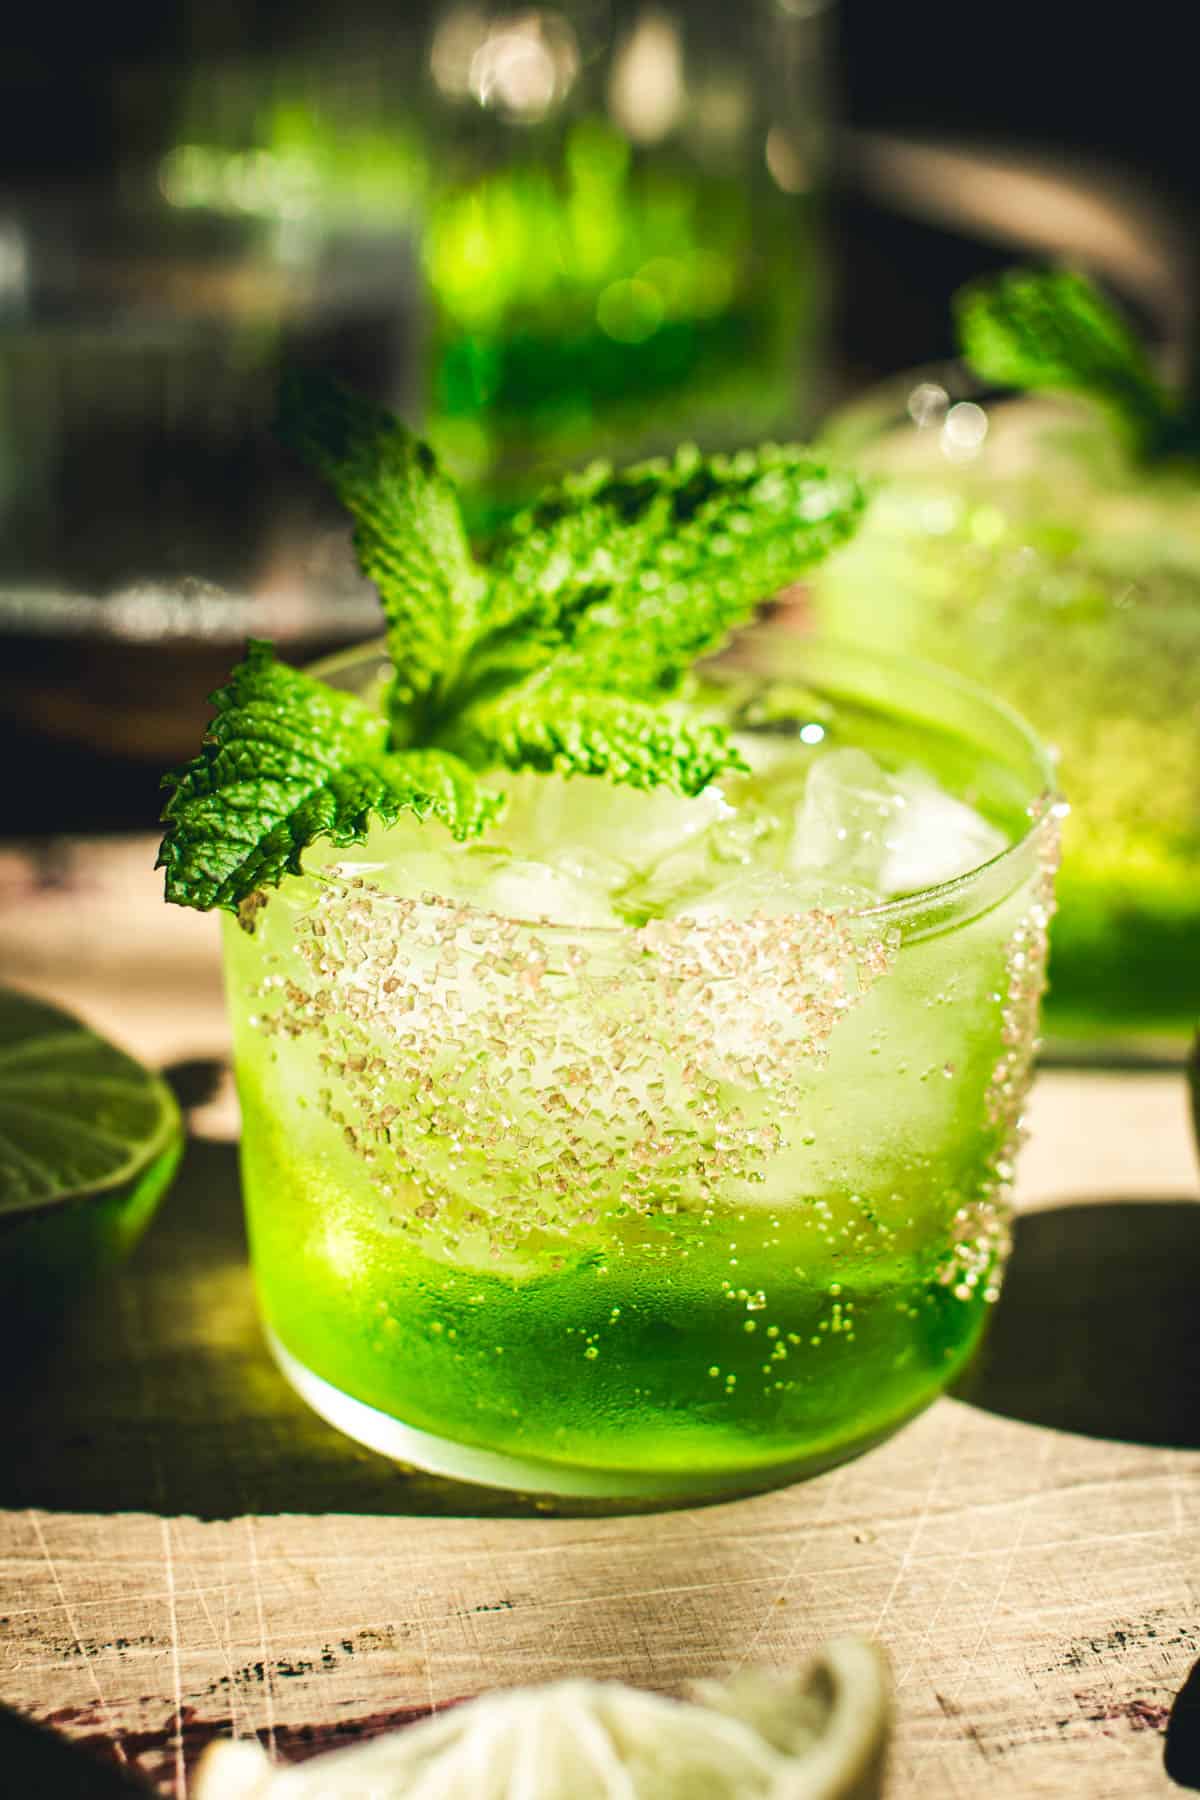 Midori cocktail with a mint leaf garnish.